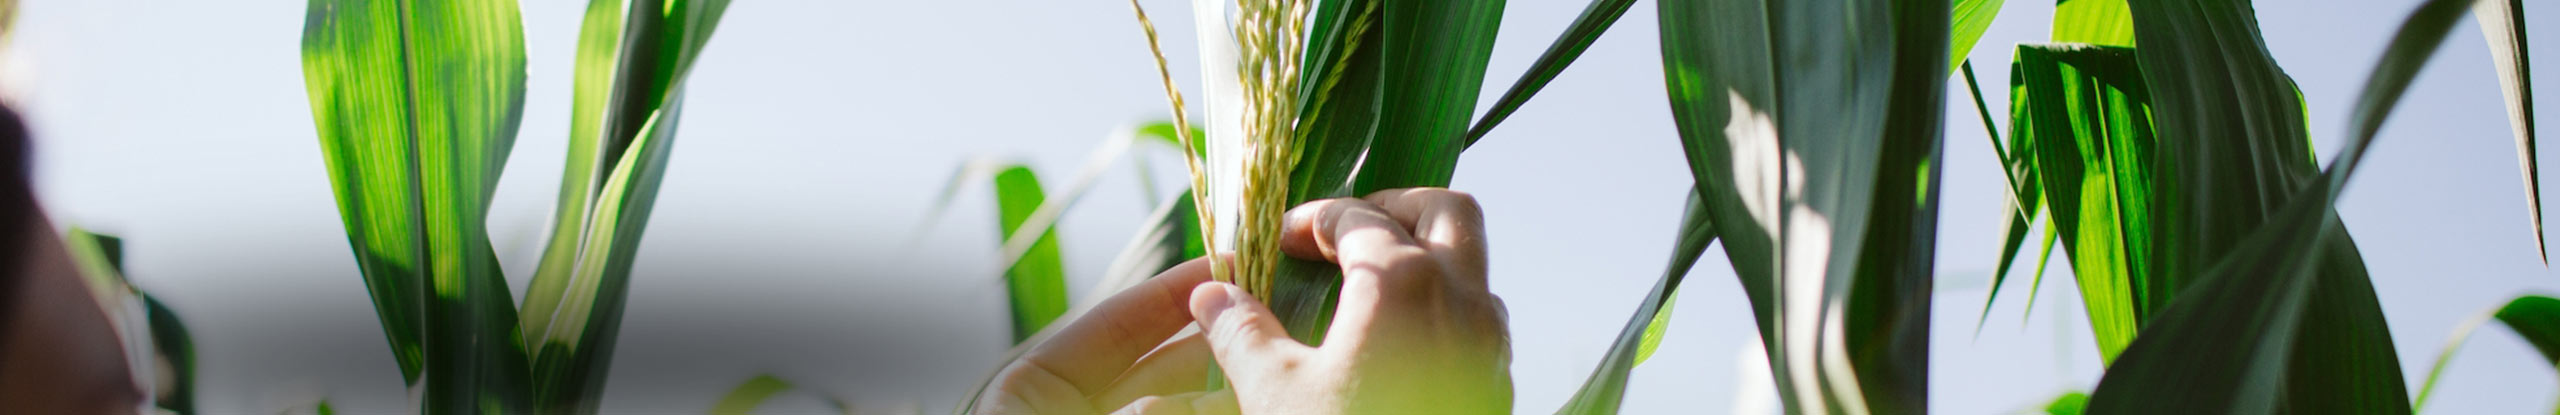 The Manitoba Corn Initiative: Corn in crop rotation